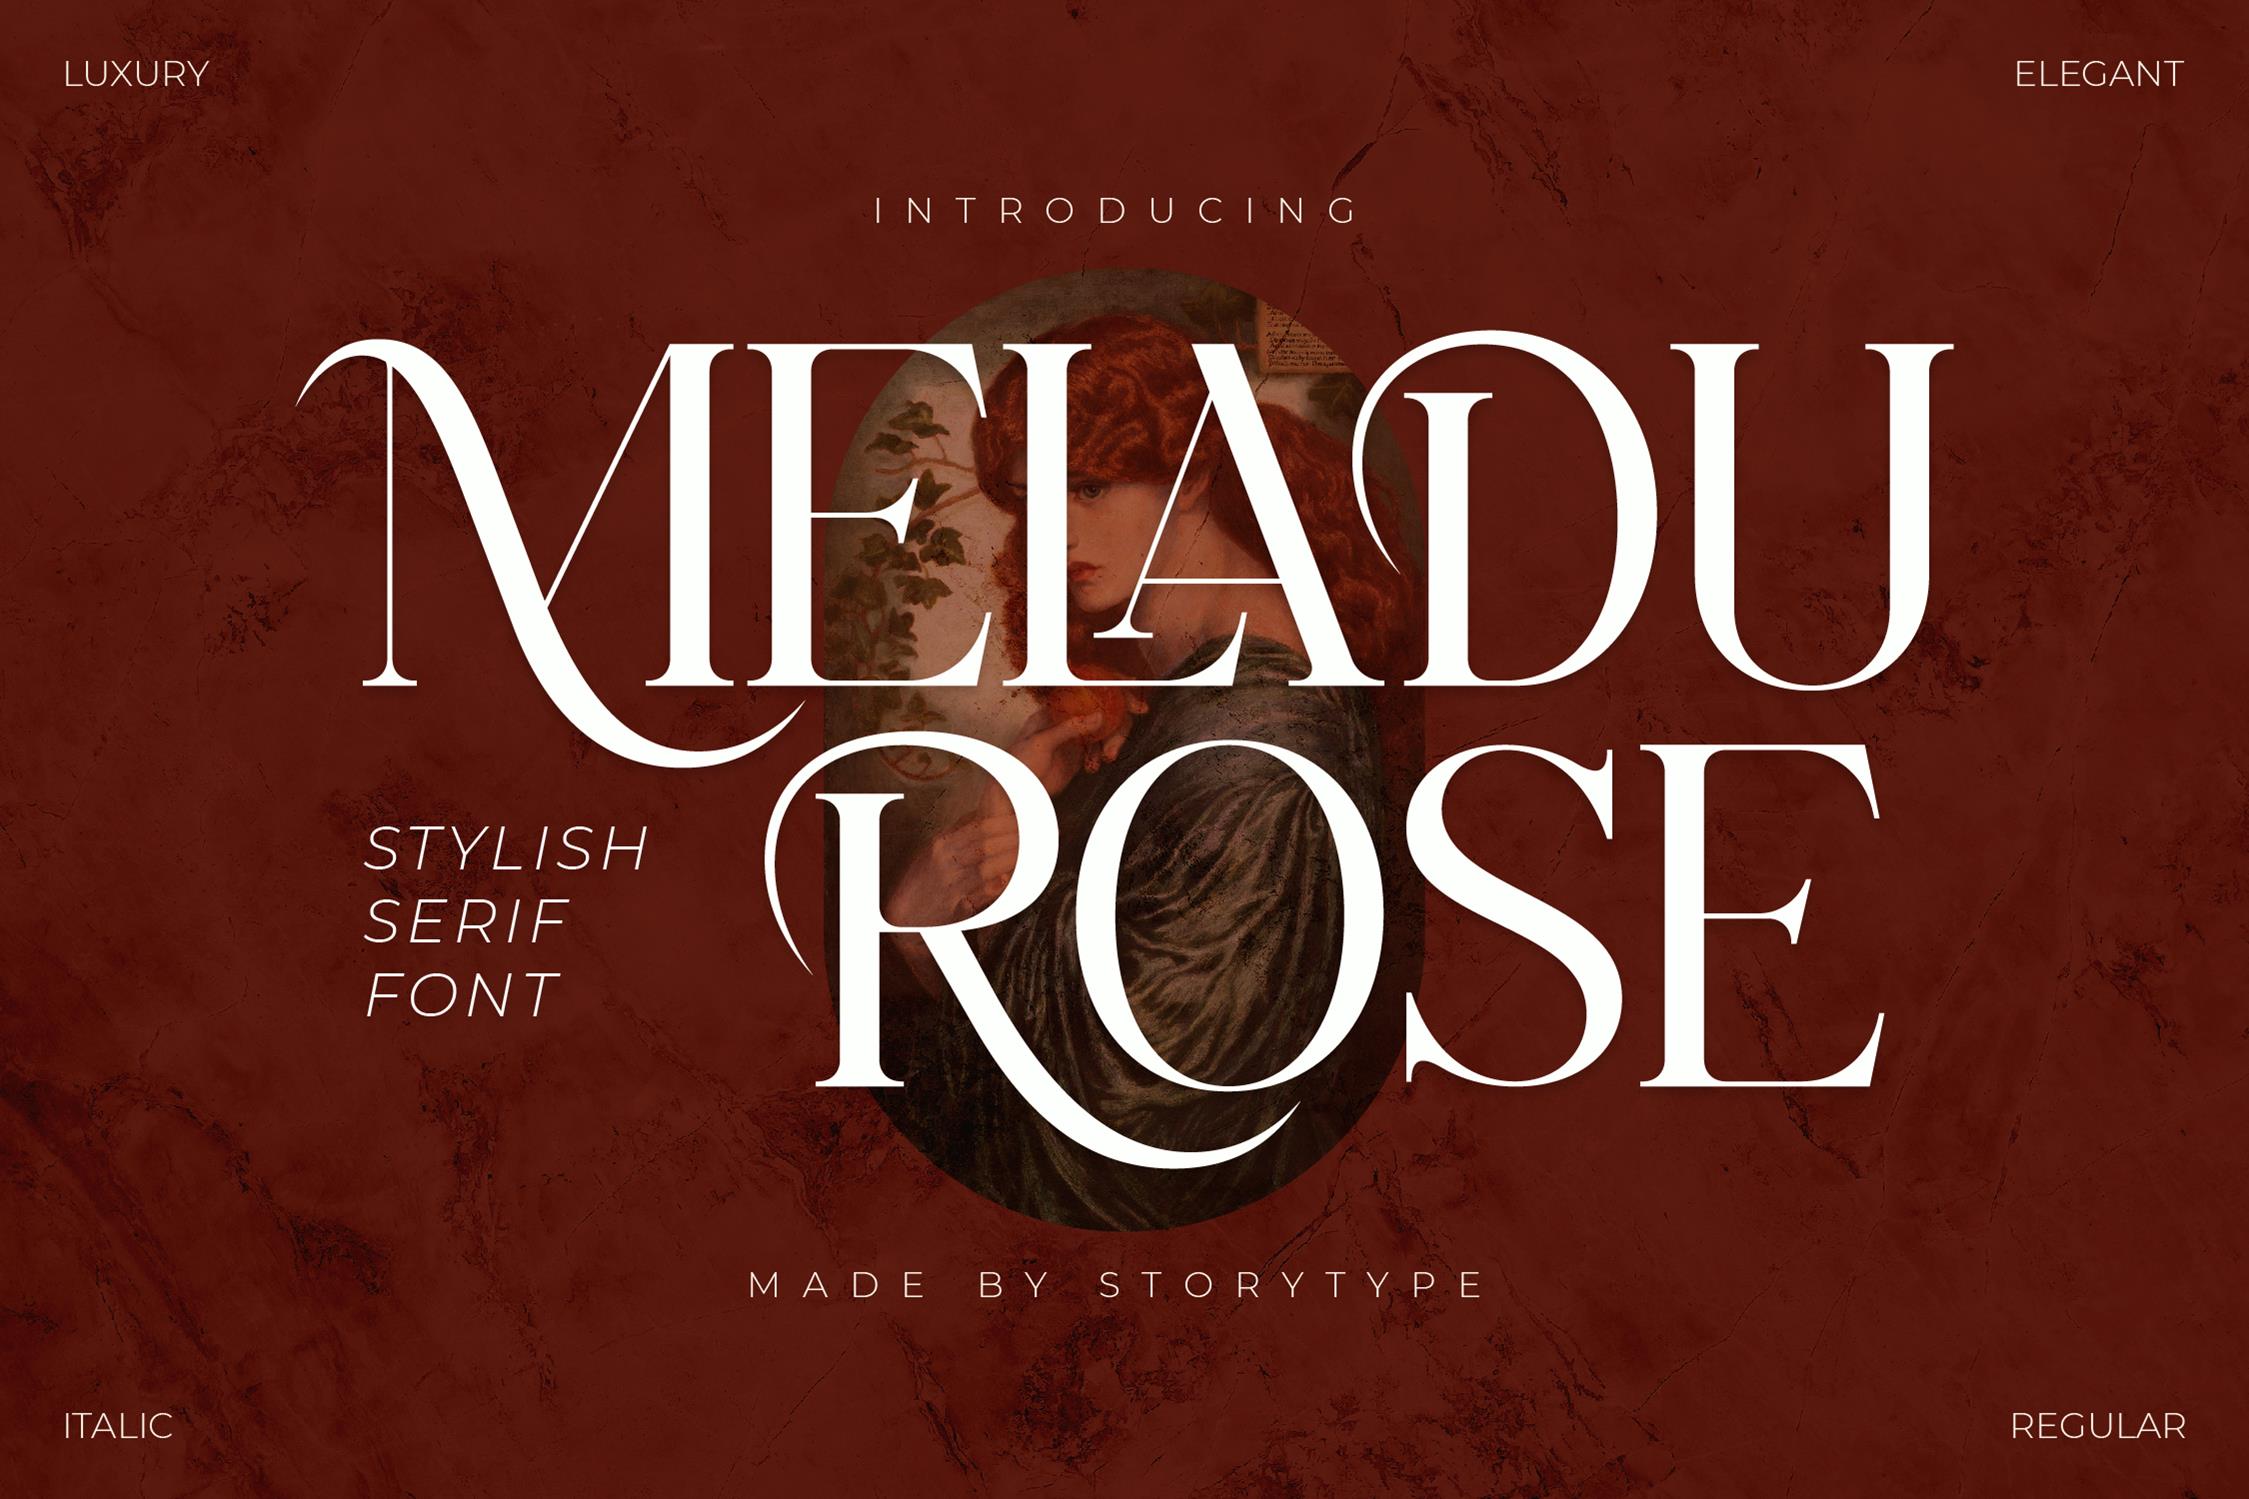 MELADU ROSE Serif Font